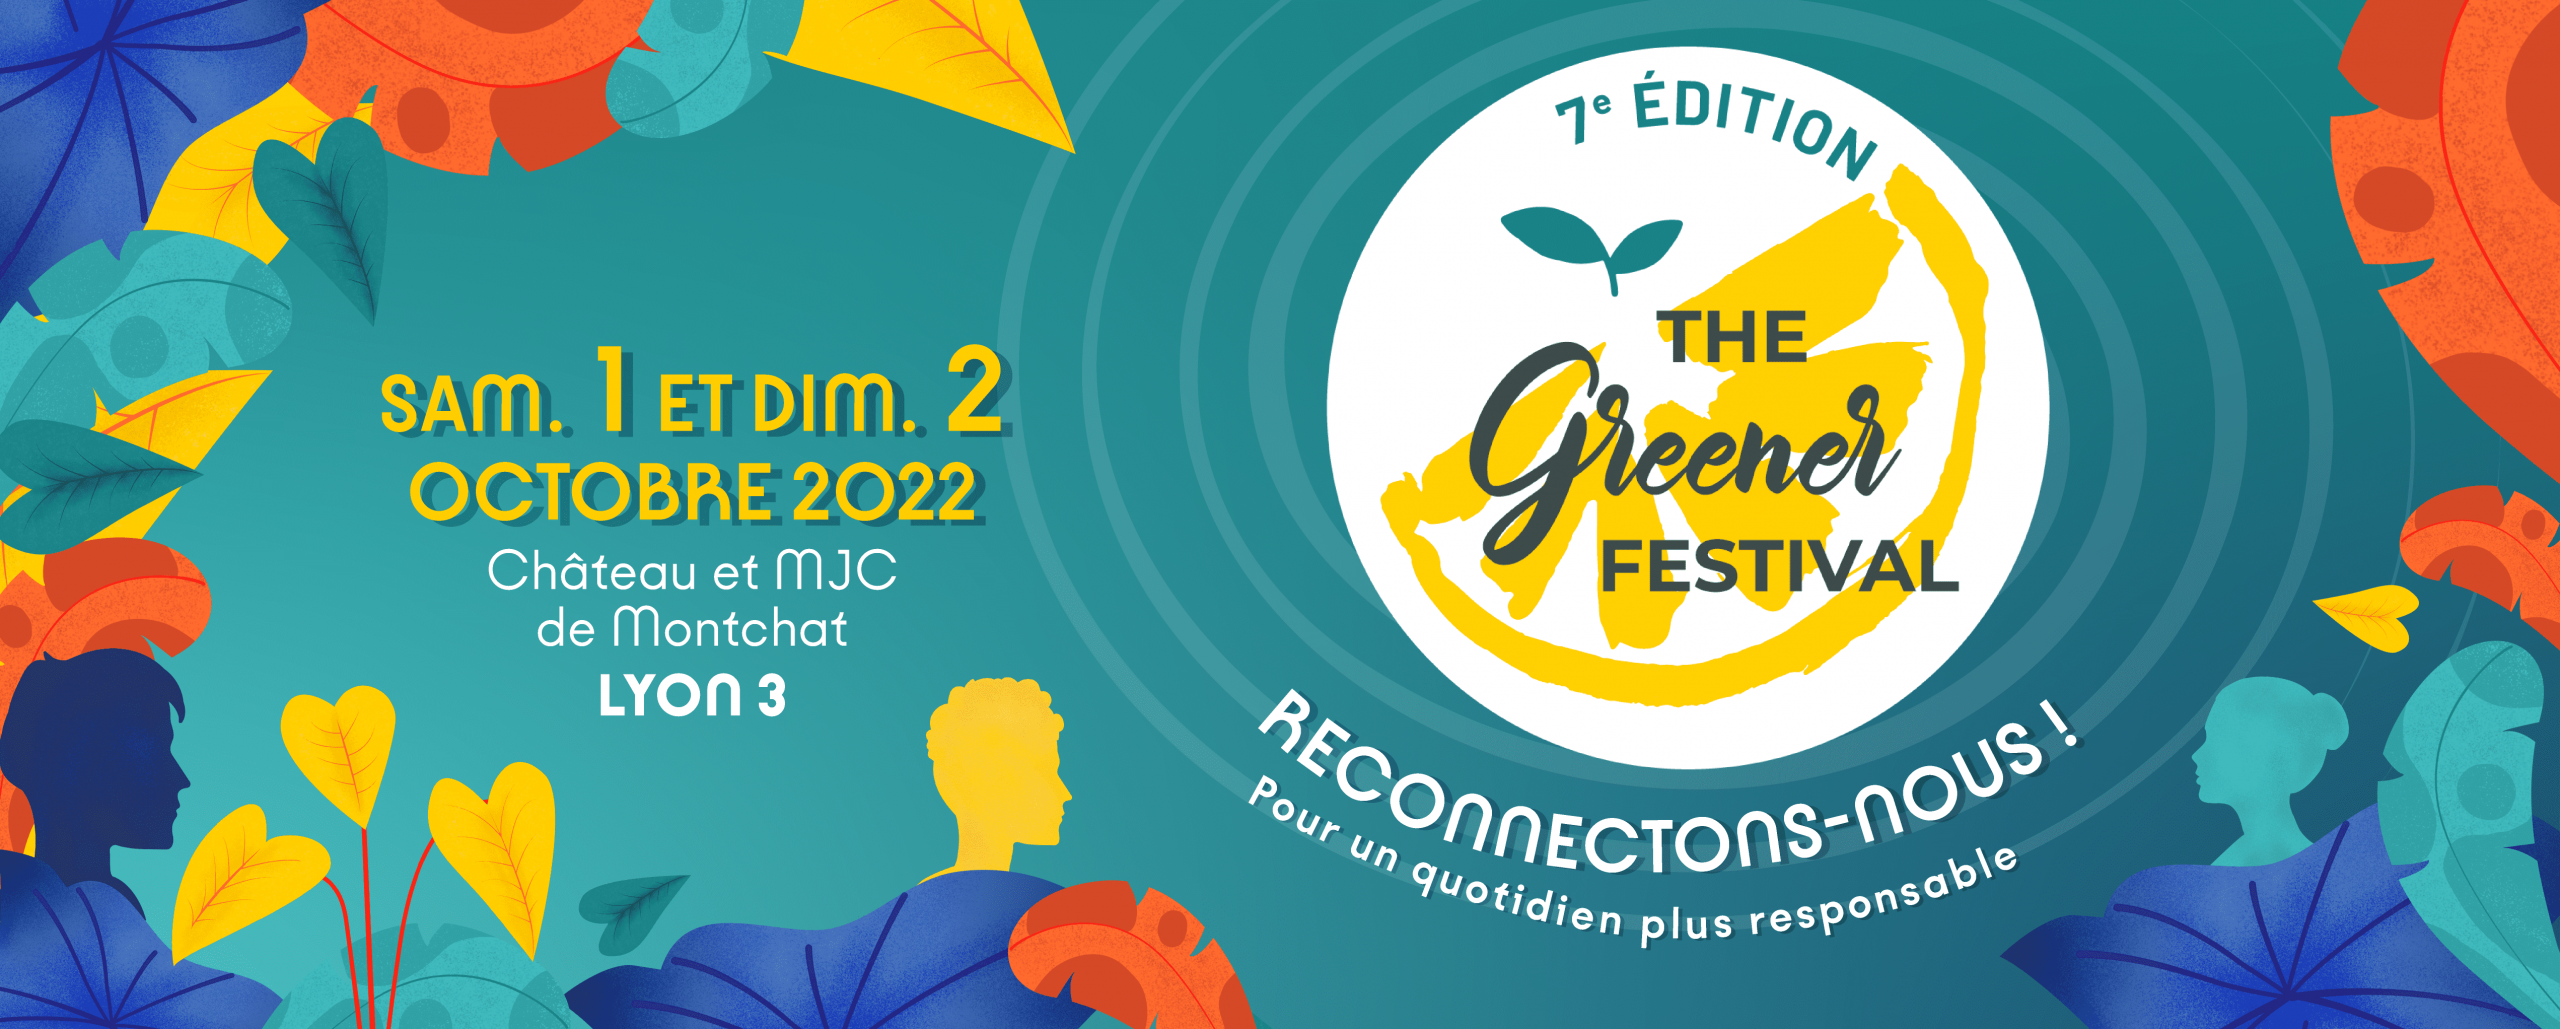 Bannière Facebook The Greener Festival